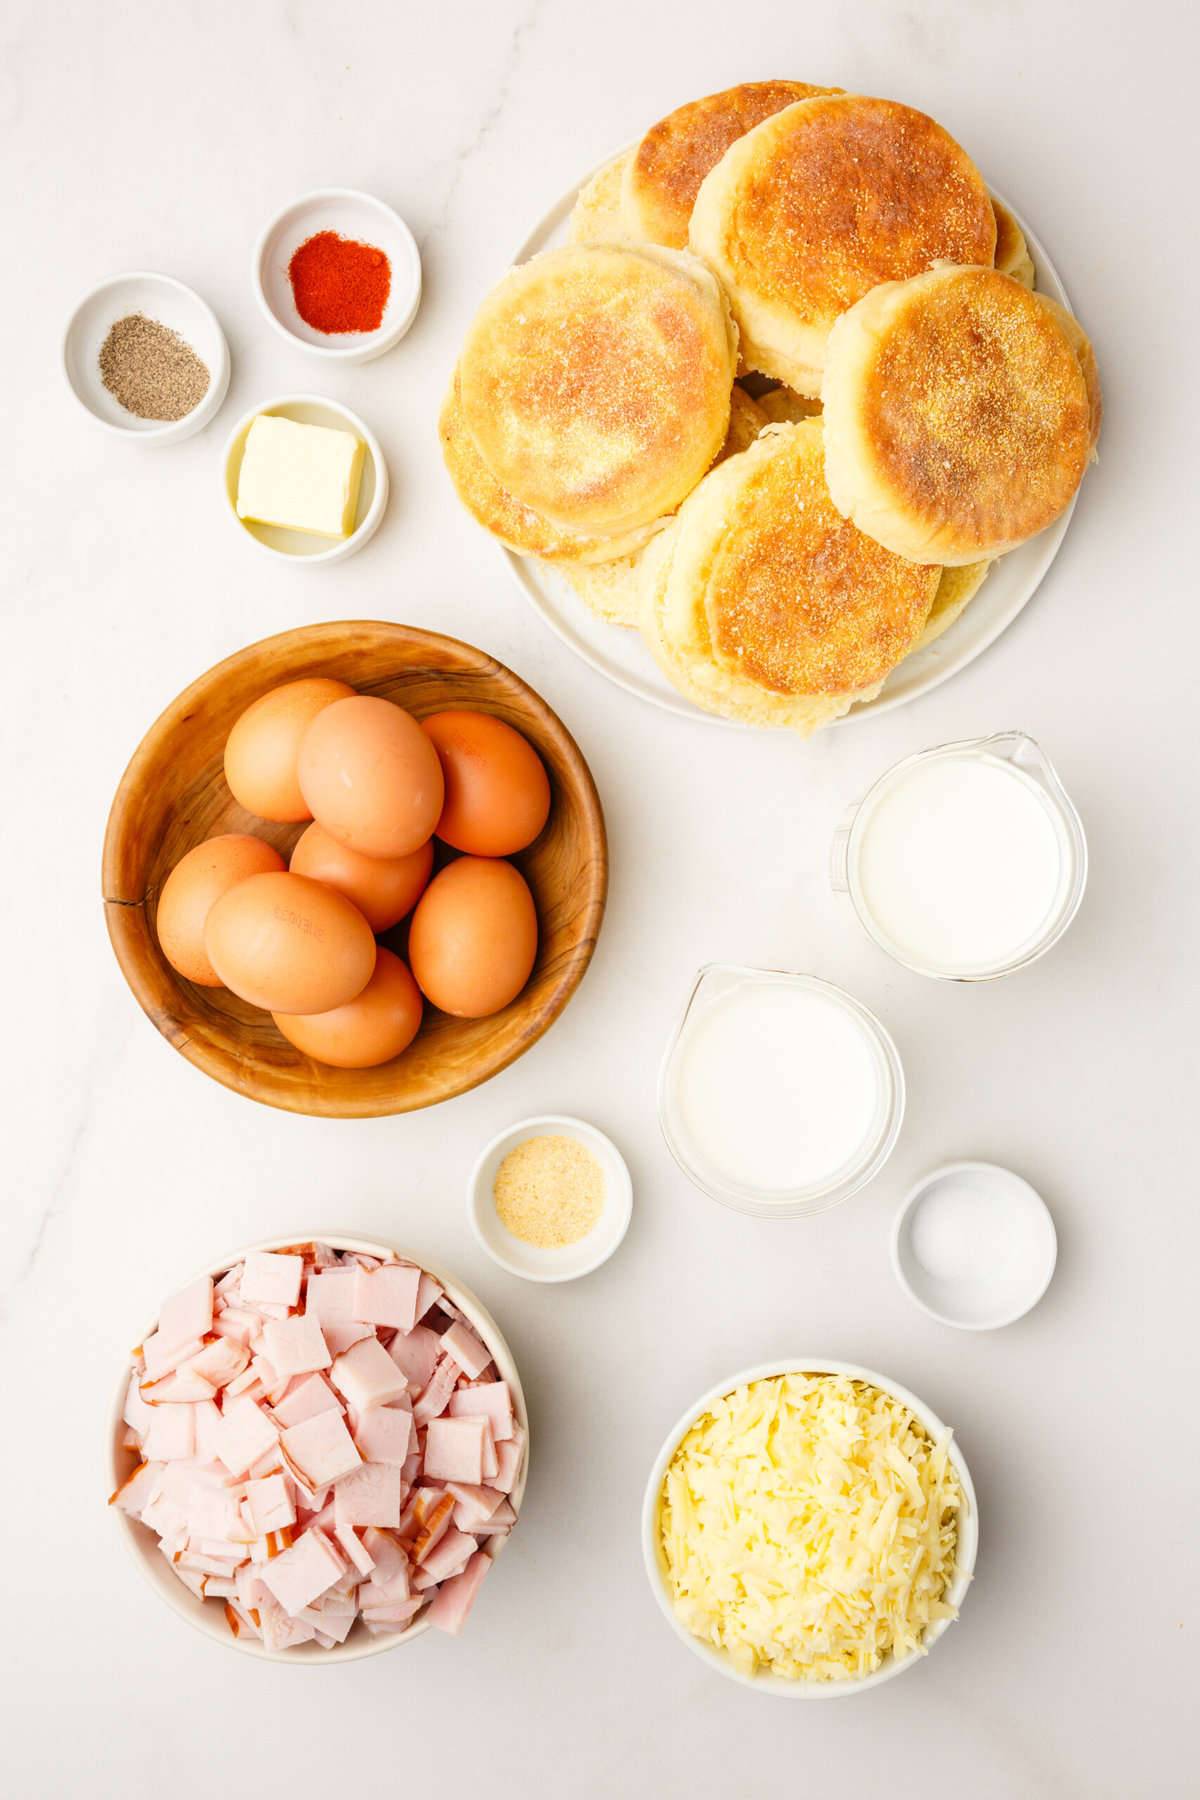 ingredients to make eggs benedict casserole. 